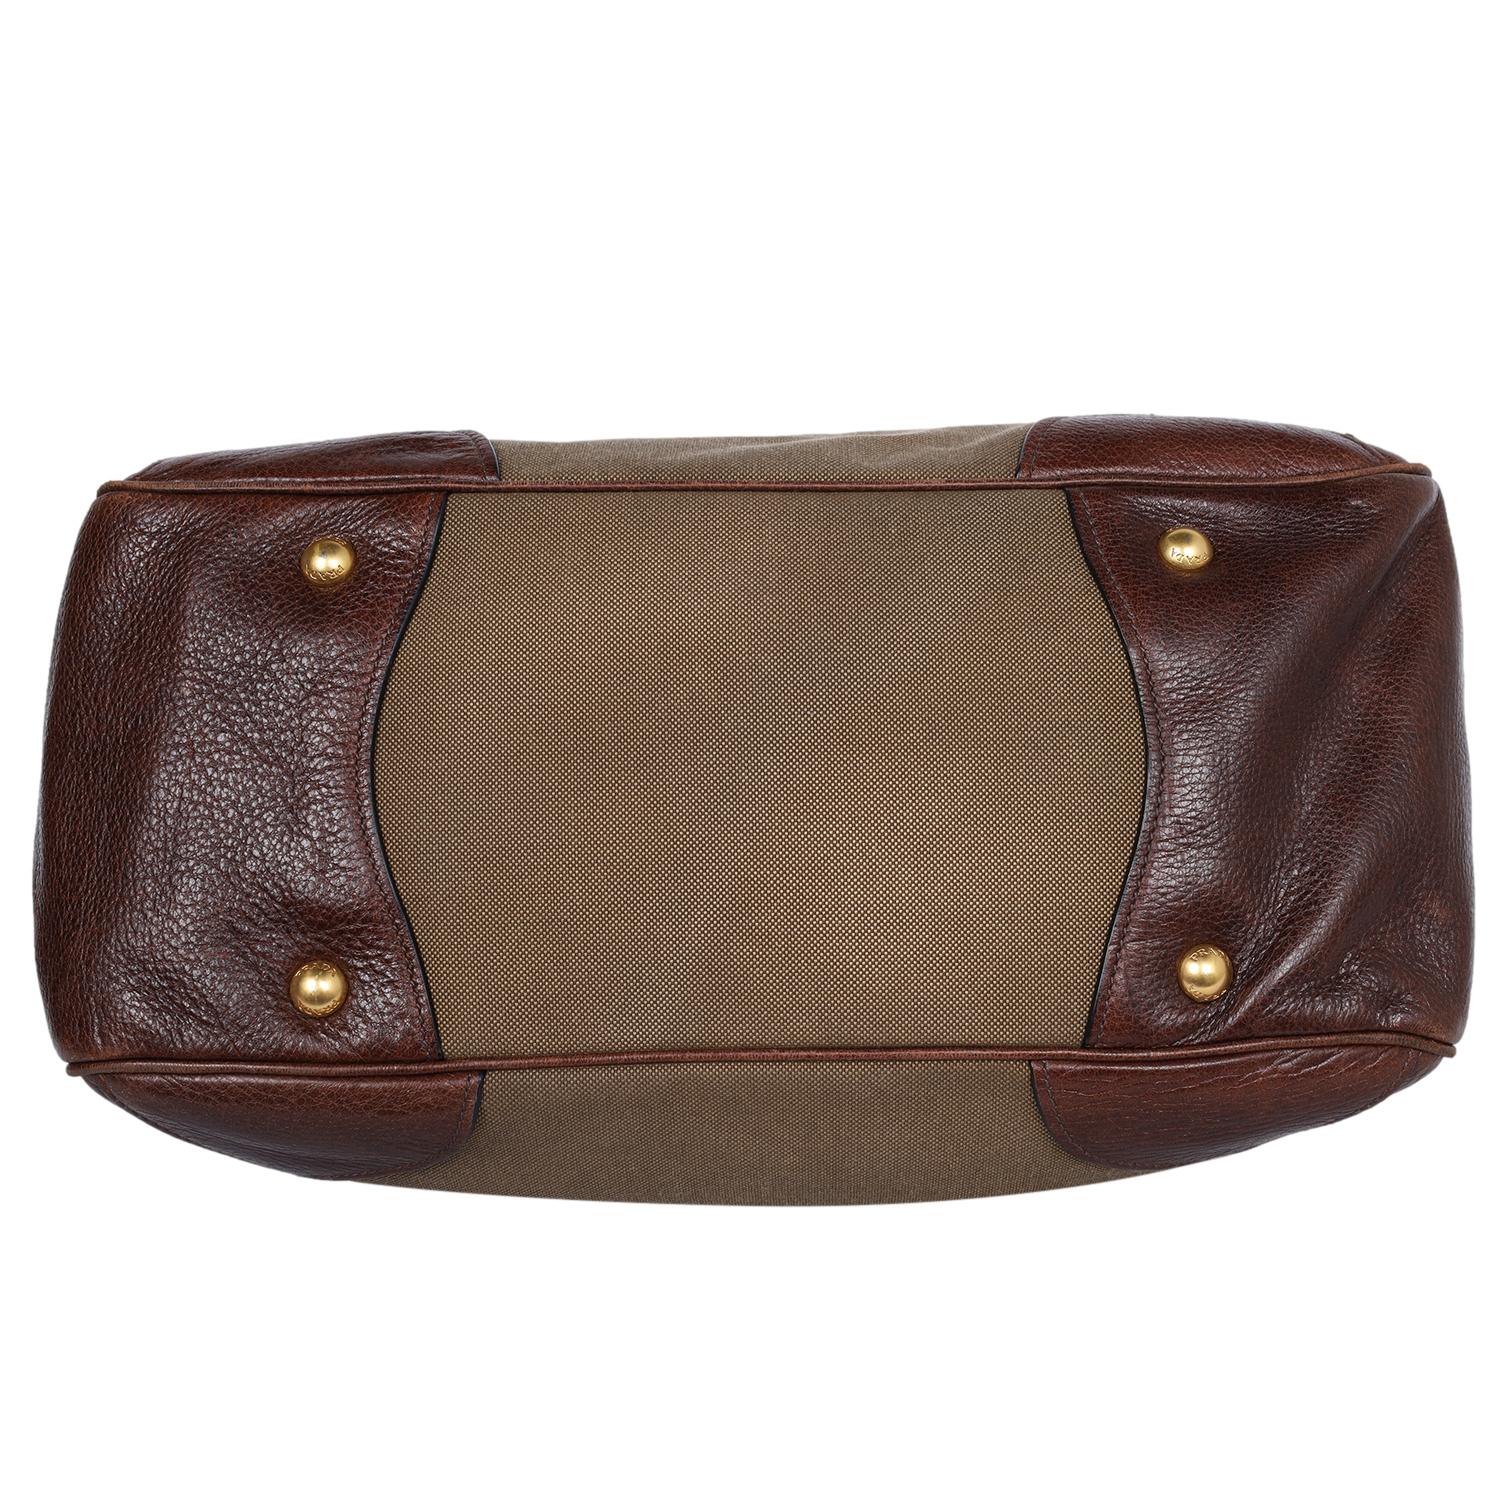 Prada Jacquard Milano Canvas Leather Shoulder Bag Brown 5